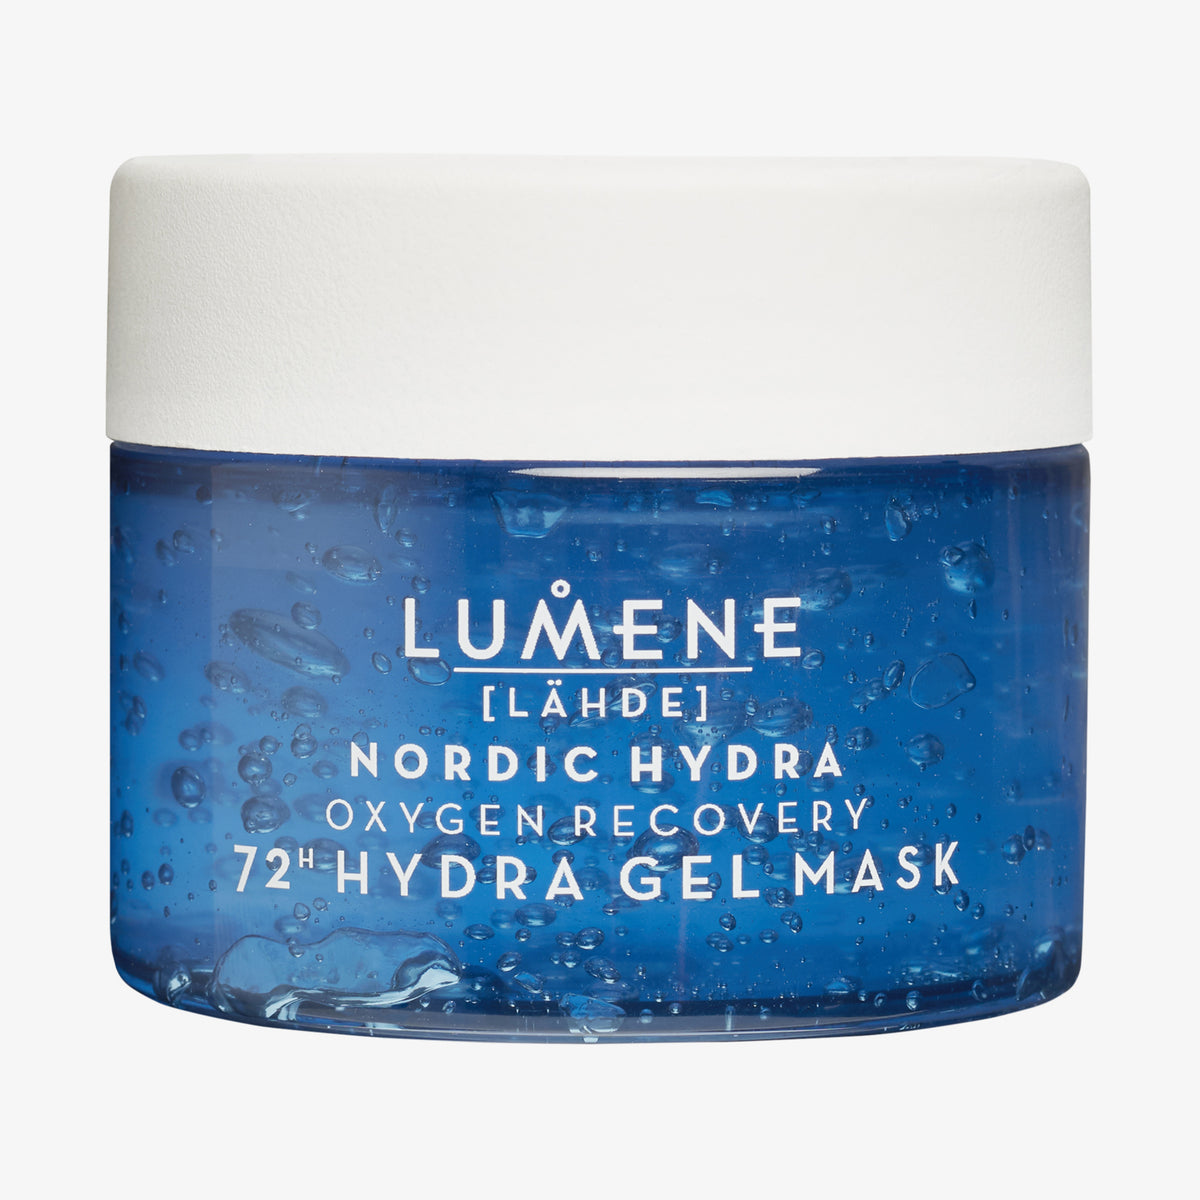 Lumene | NORDIC HYDRA [LAHDE] Oxygen Recovery 72h Hydra Gel Mask